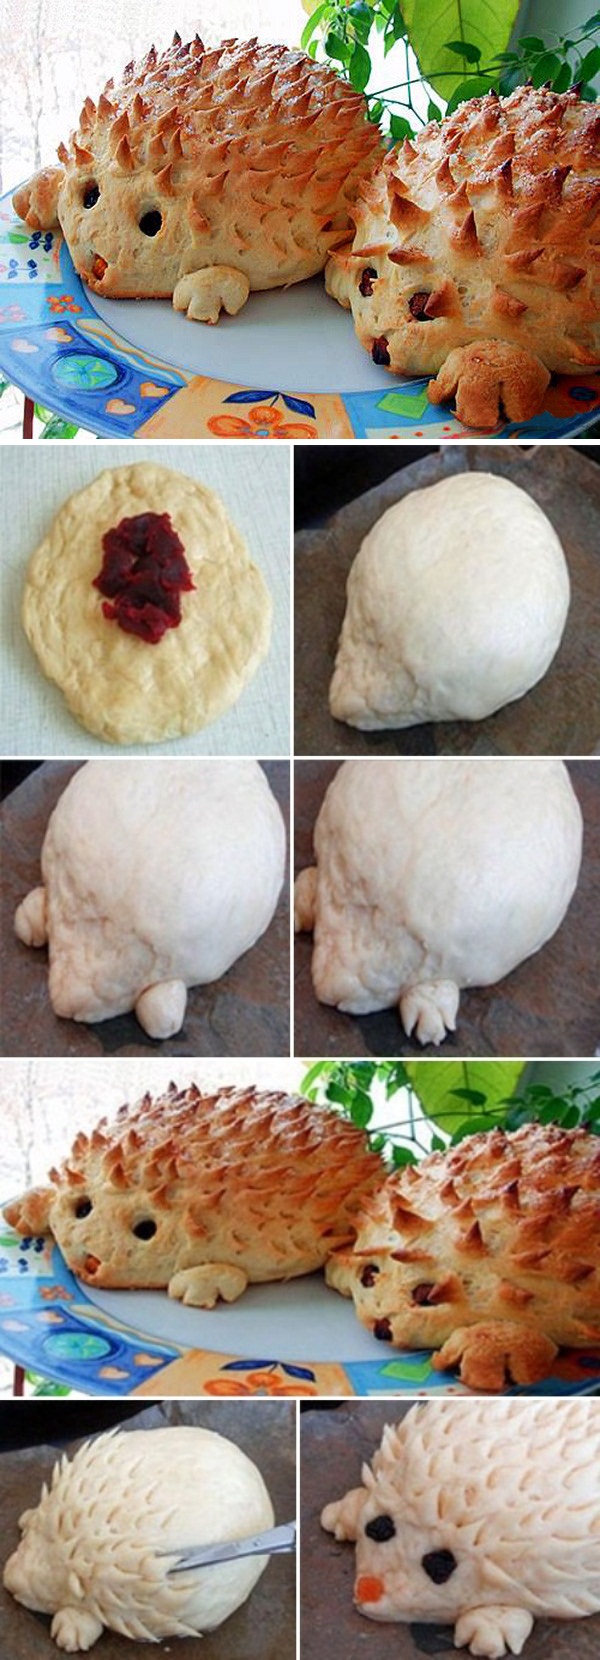 Bread-hedgehog-pinterest